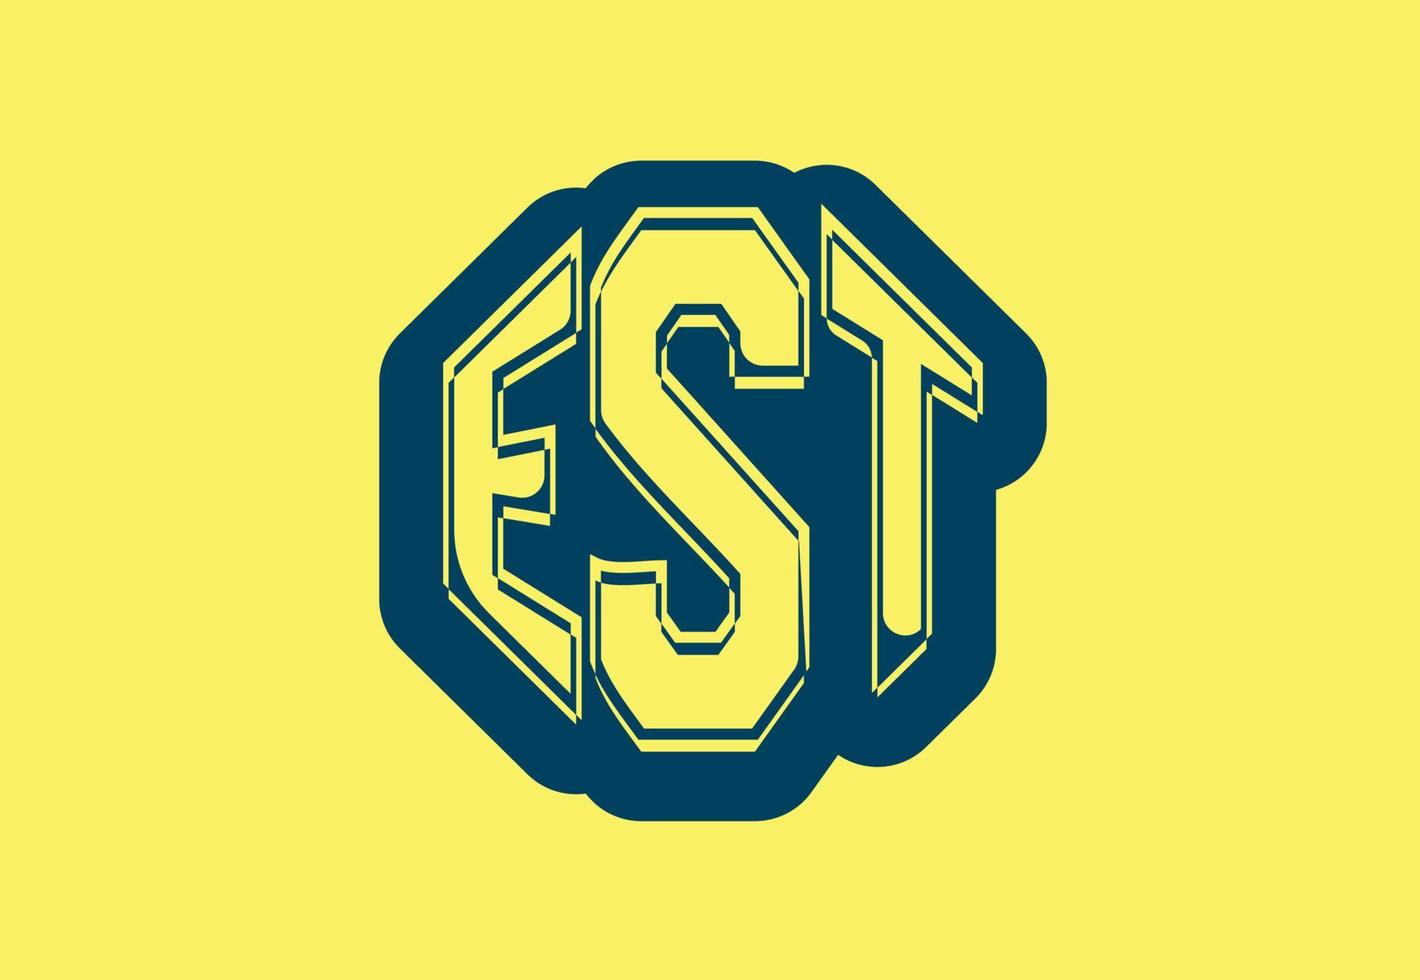 EST letter logo and icon design template vector